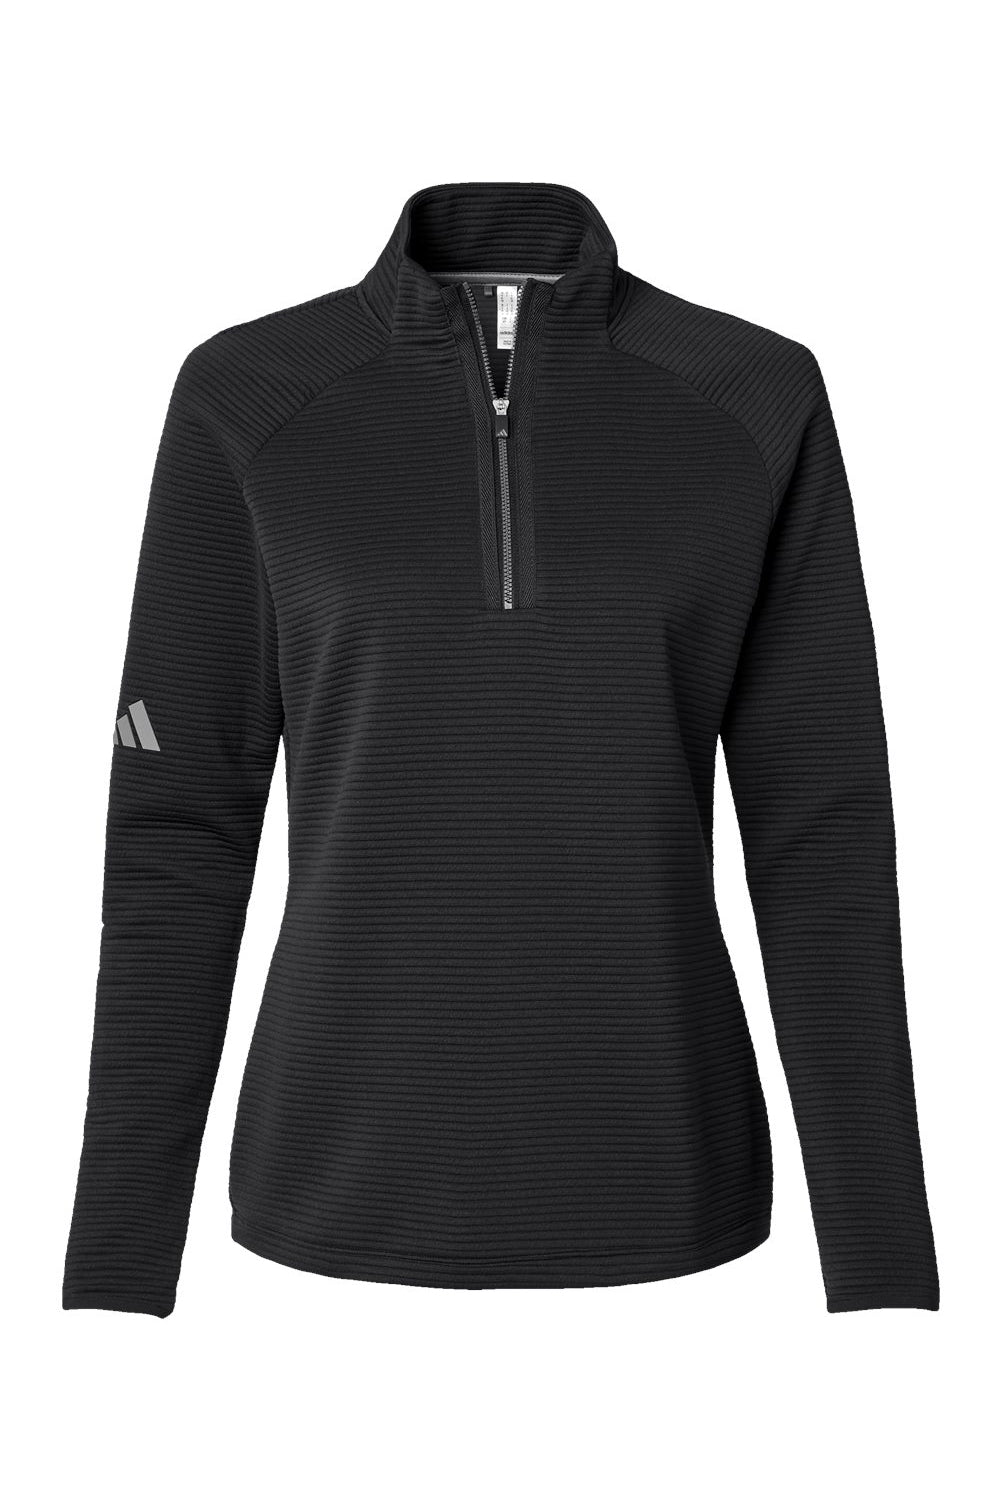 Adidas A589 Womens Spacer 1/4 Zip Sweatshirt Black Flat Front